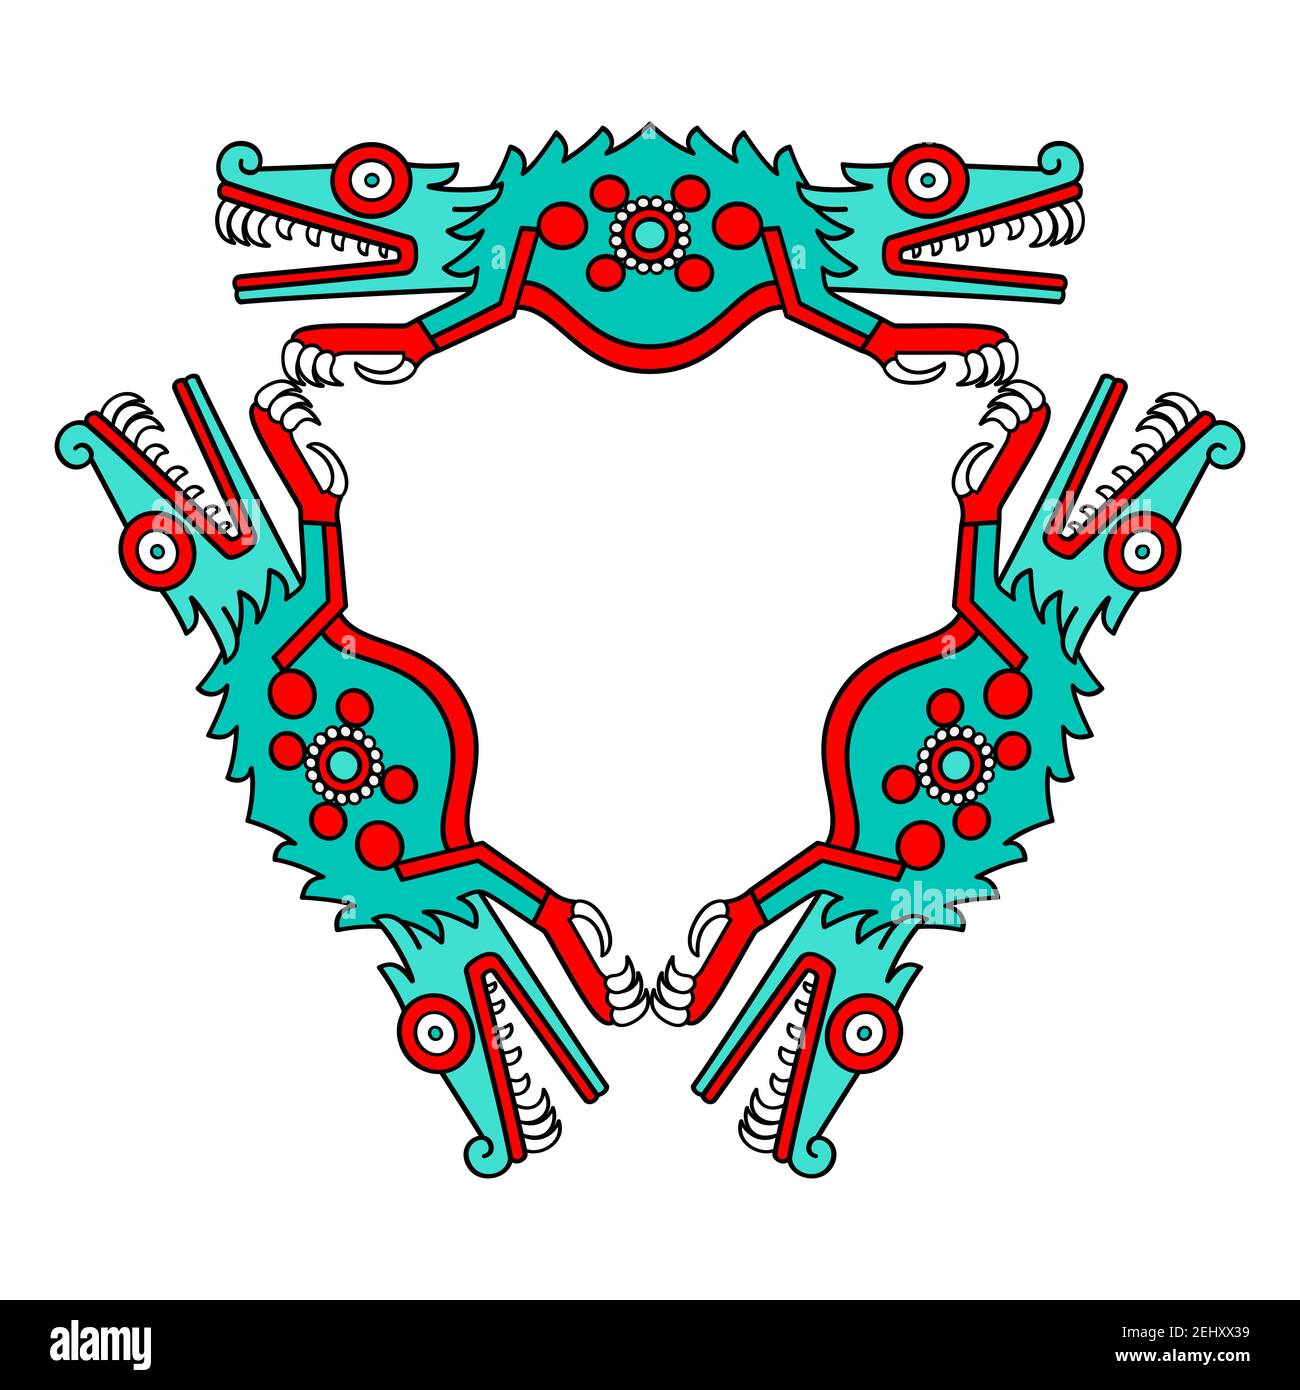 Bunte dreieckige Krokodil Ornament, im Azteken Stil. Türkisfarbenes, rotes und schwarzes Dreieck aus Krokodilkörperhälften. Stockfoto